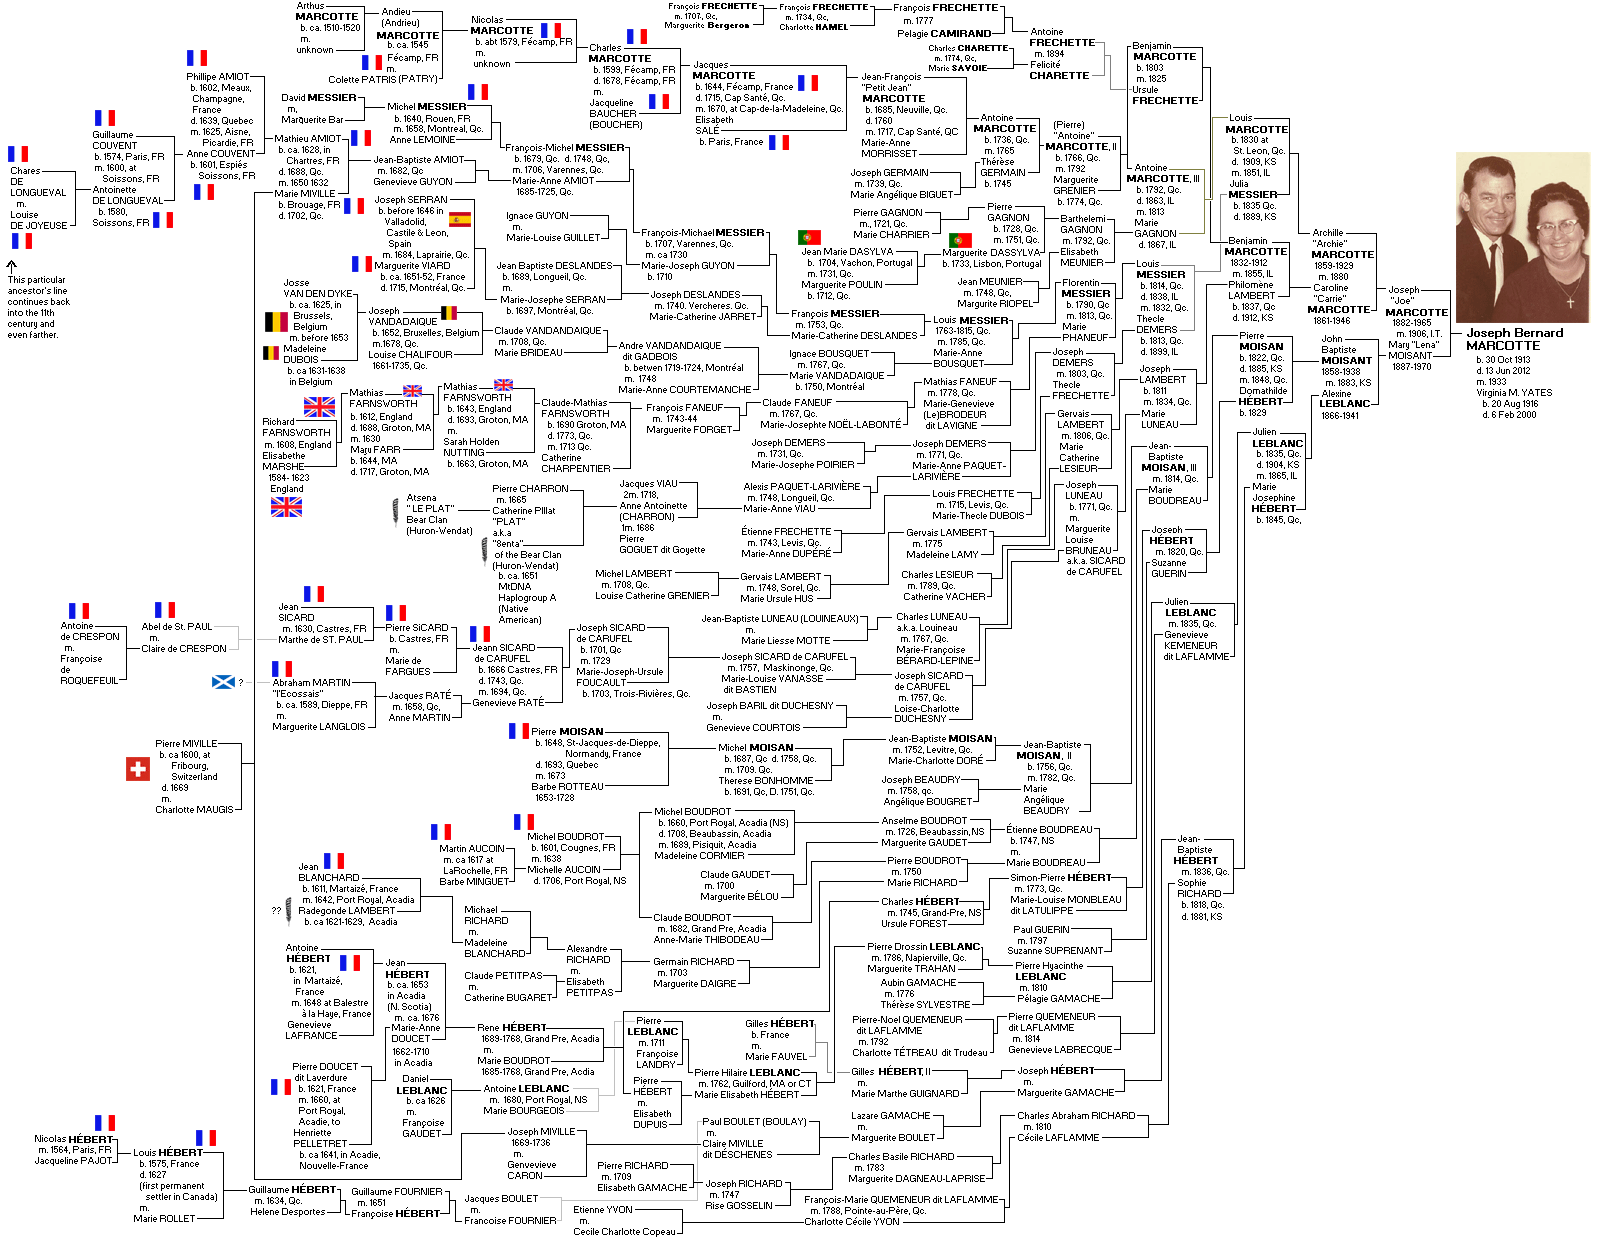 Marcotte genealogy